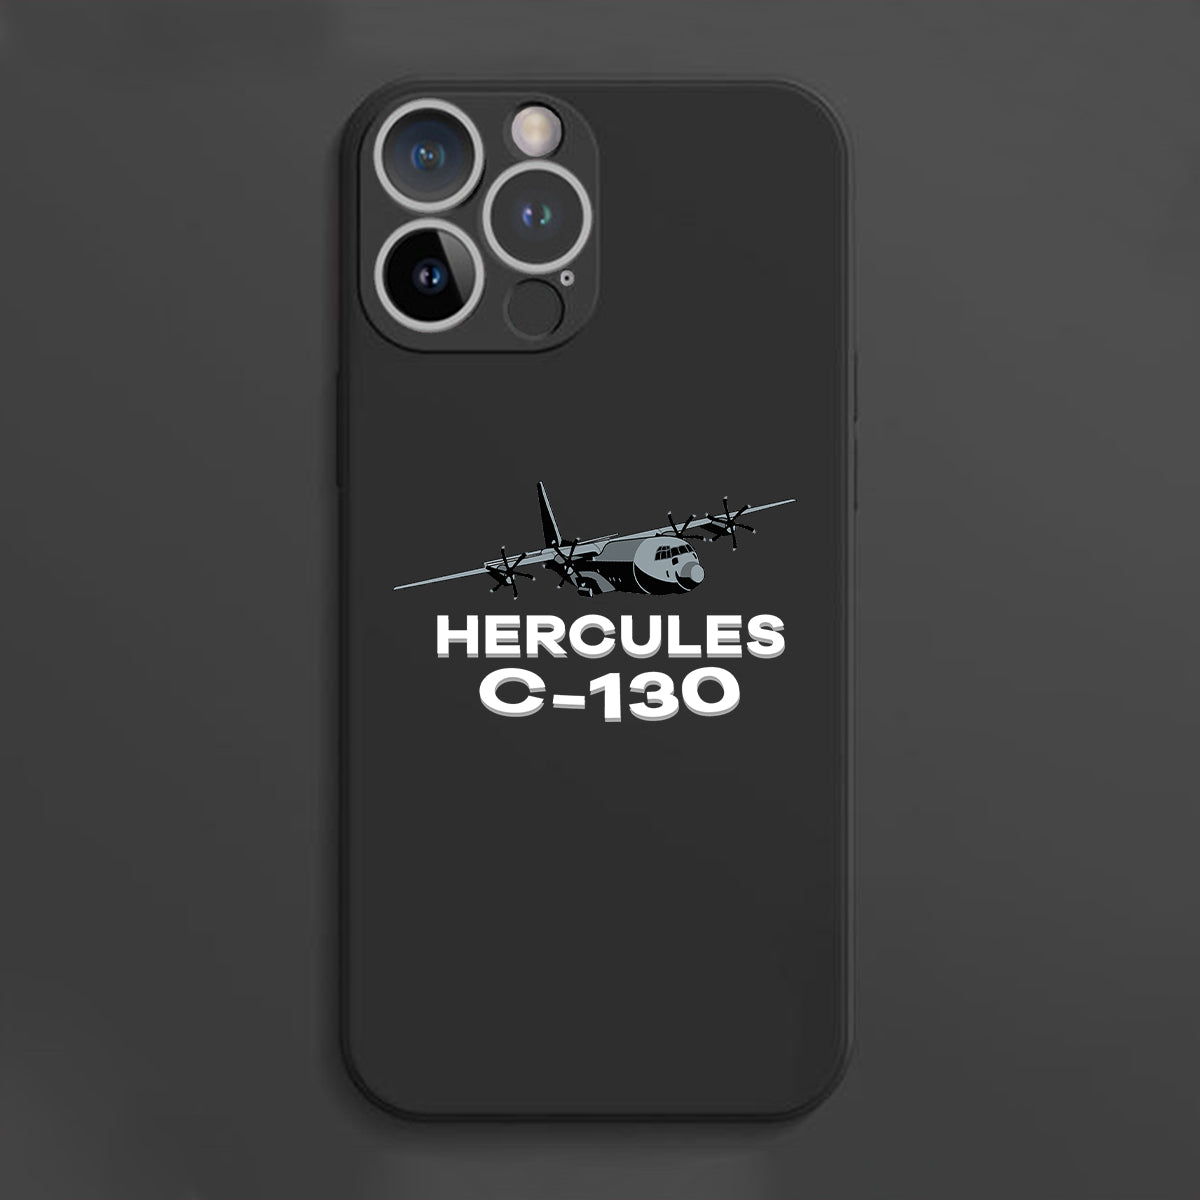 The Hercules C130 Designed Soft Silicone iPhone Cases